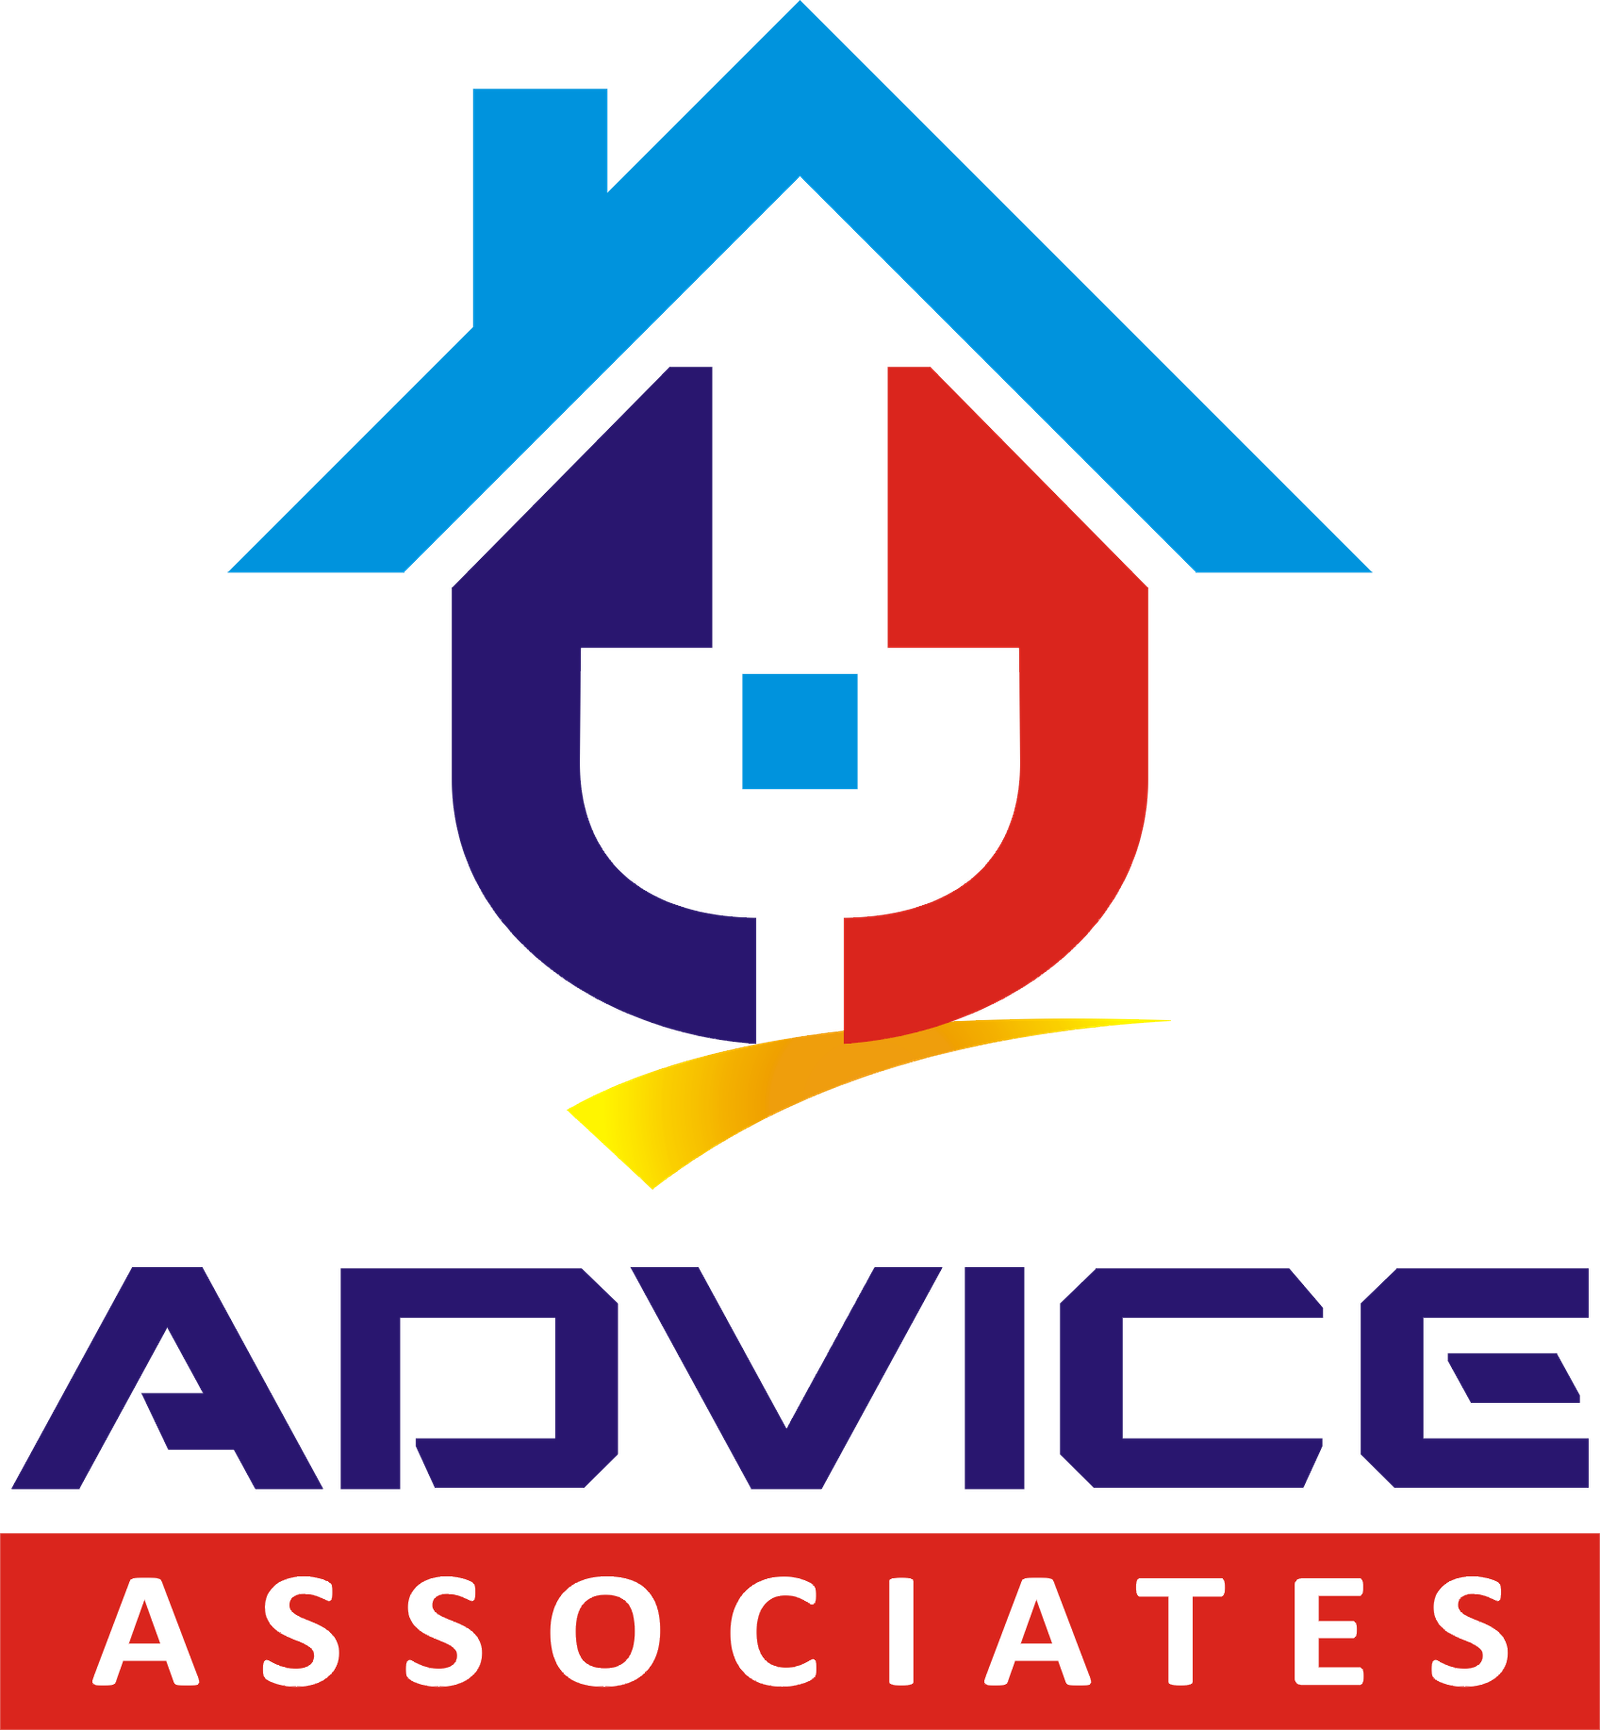 Advice Associates